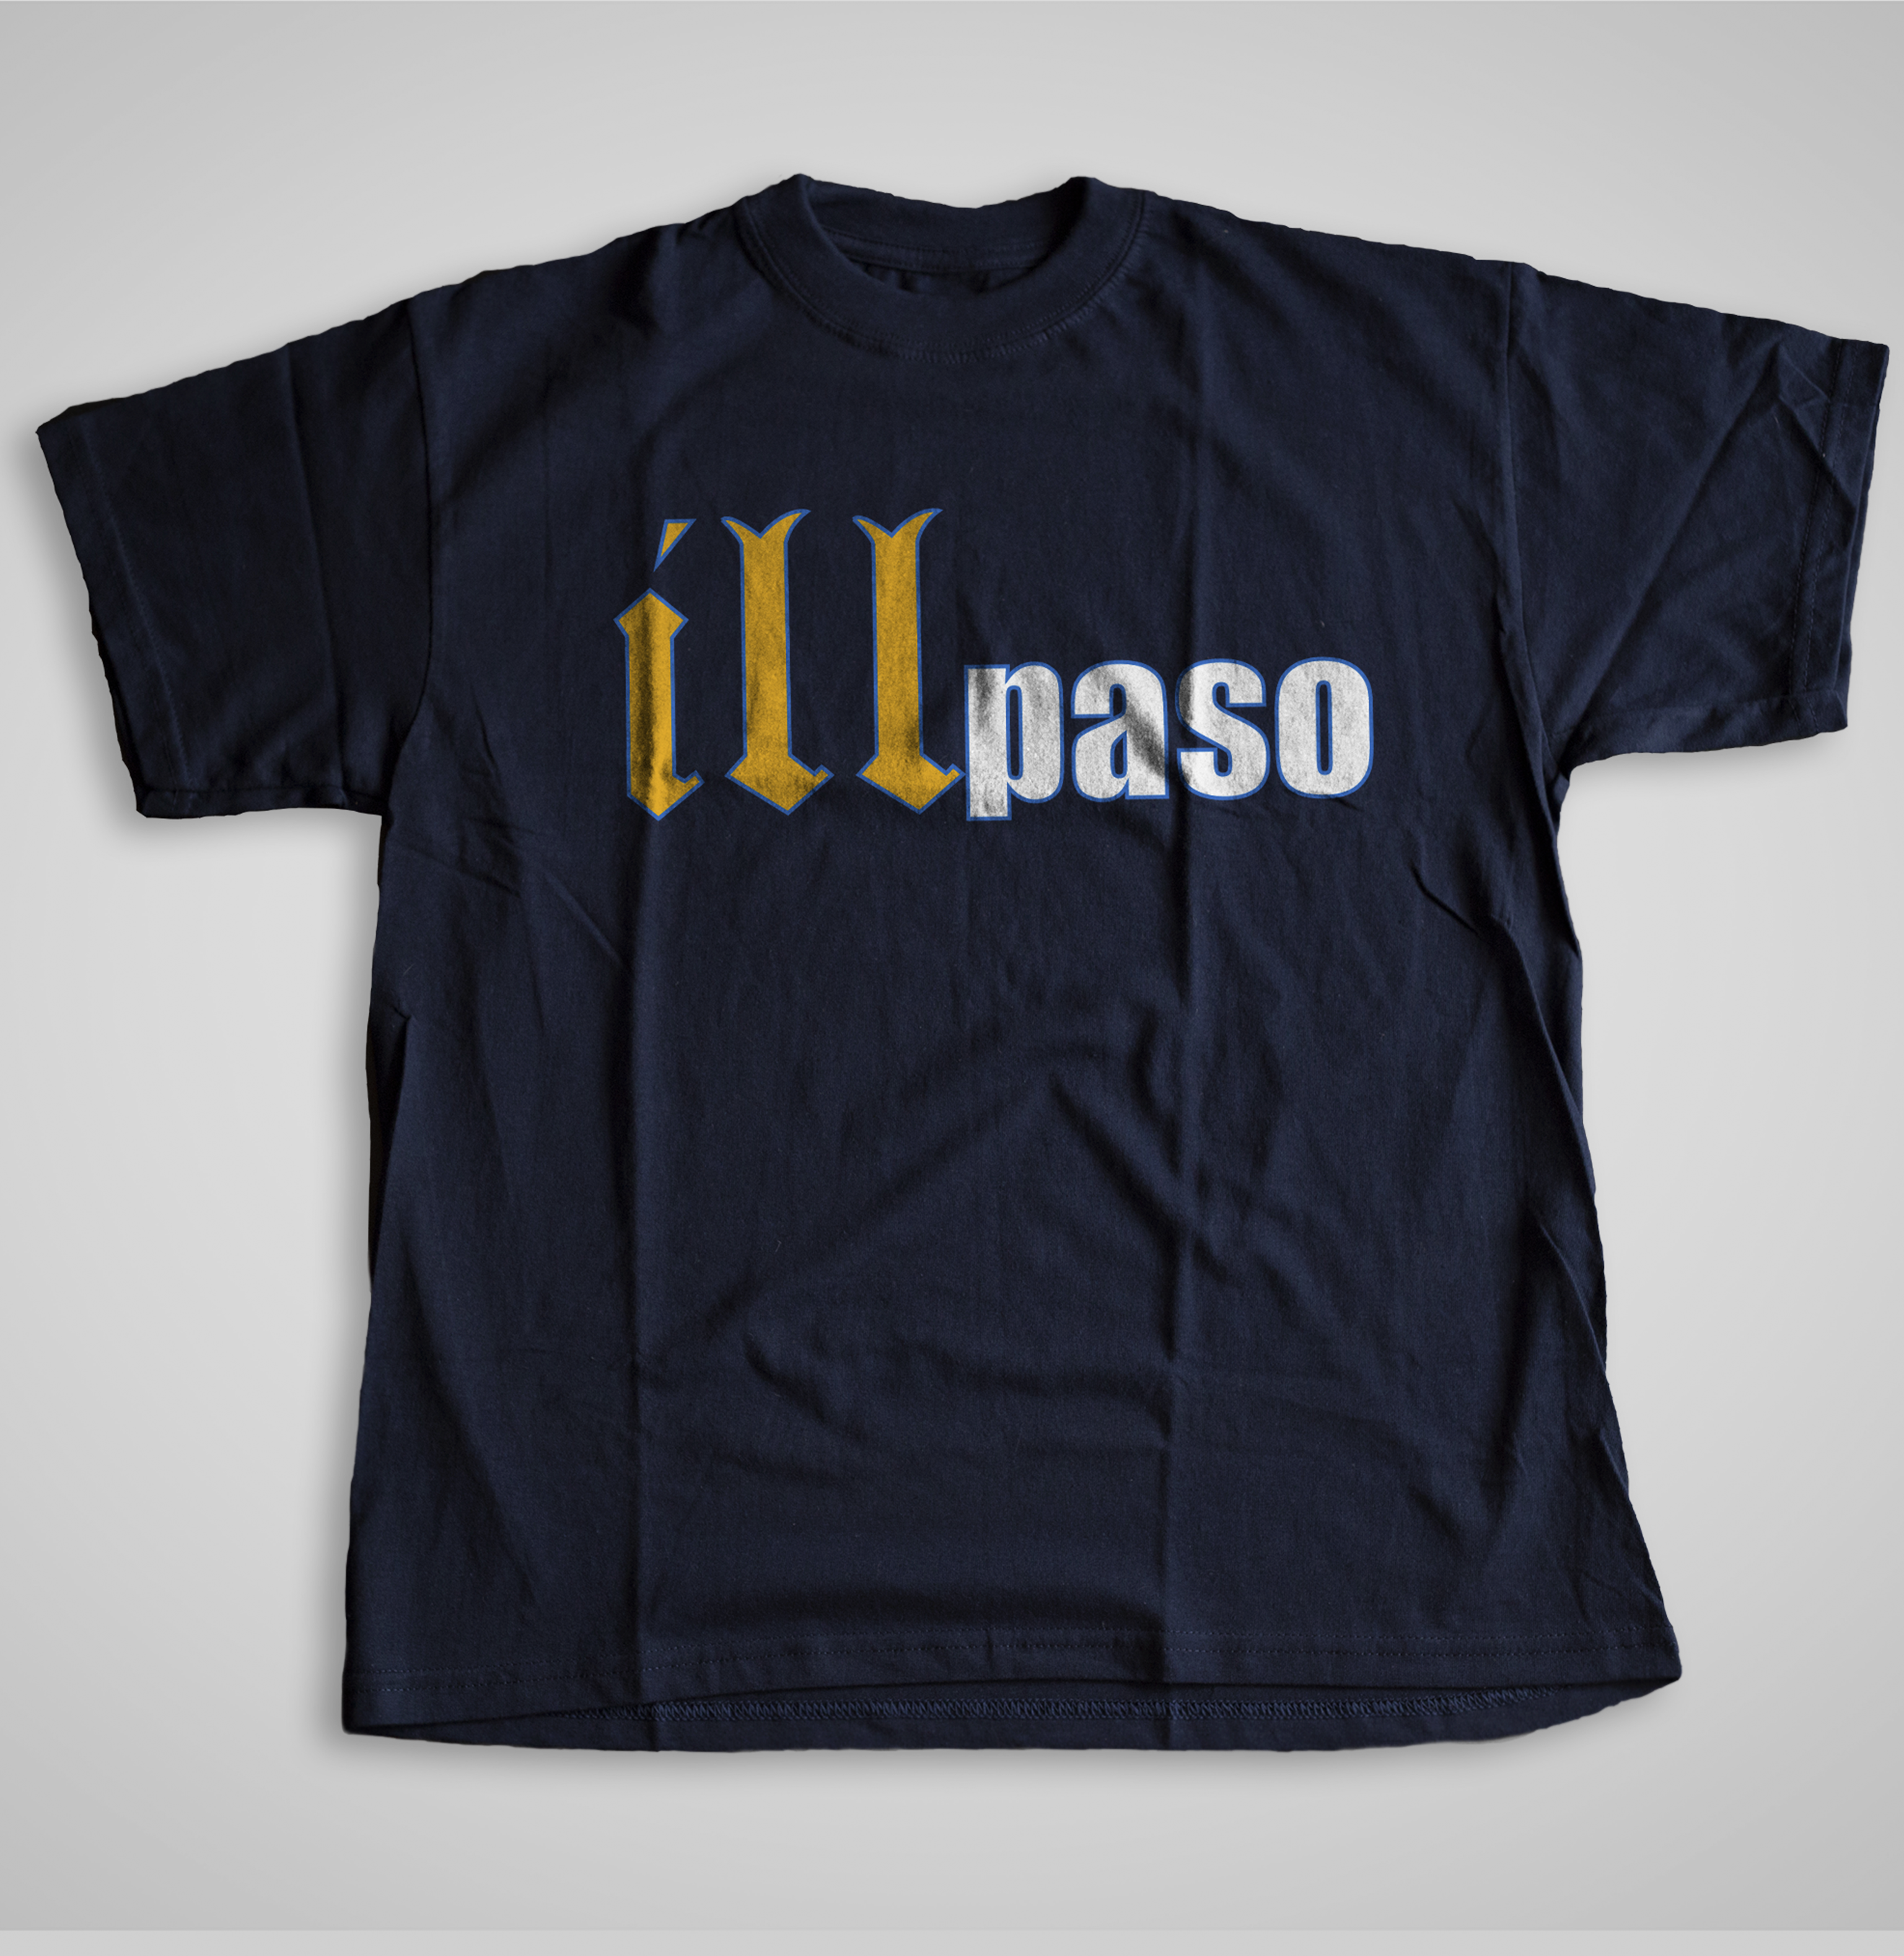 "Locomotive Tribute" Men's T-shirt (Navy Blue w/ Yellow logo) by illpaso